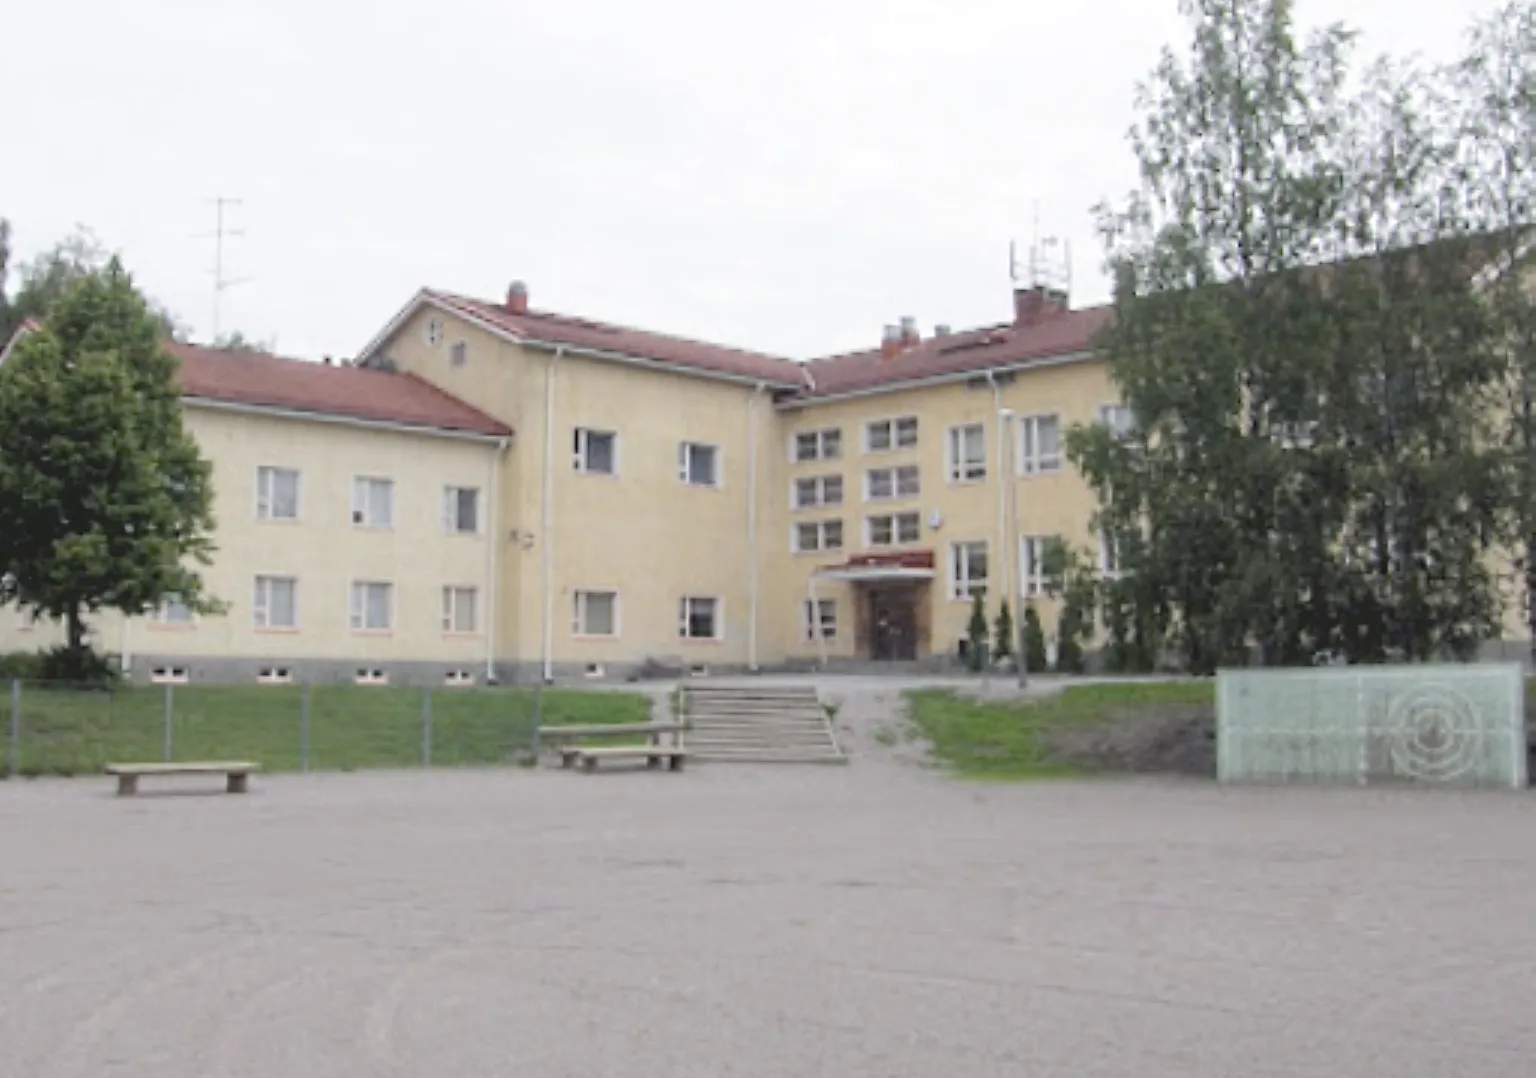 Photo showing: Ruutana School in Ruutana, Kangasala, Finland.